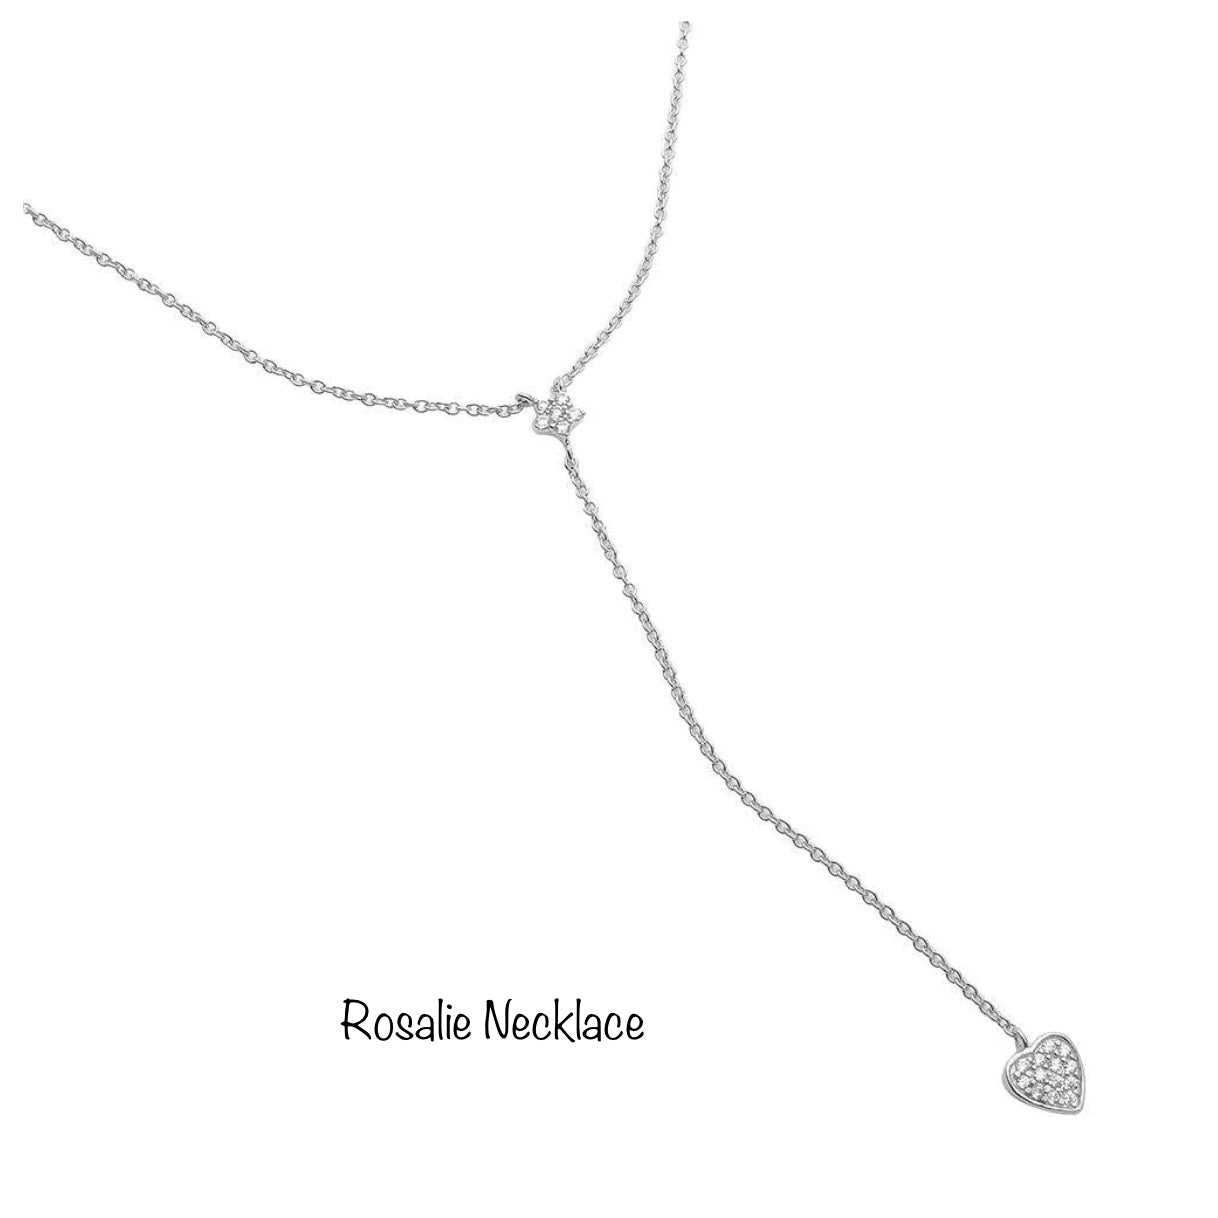 Rosalie Necklace